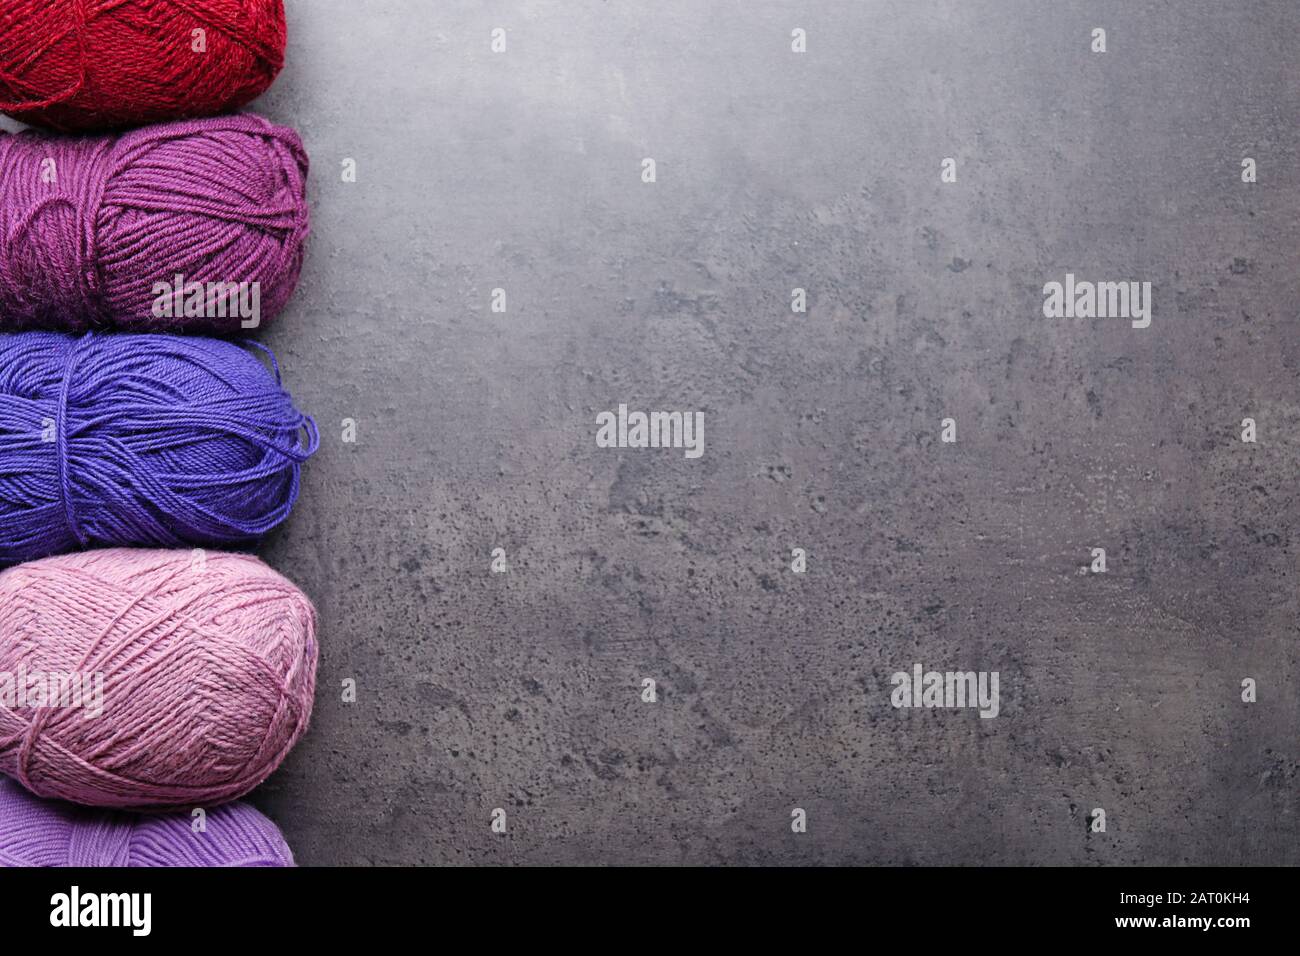 Colorful knitting yarns on grey background Stock Photo